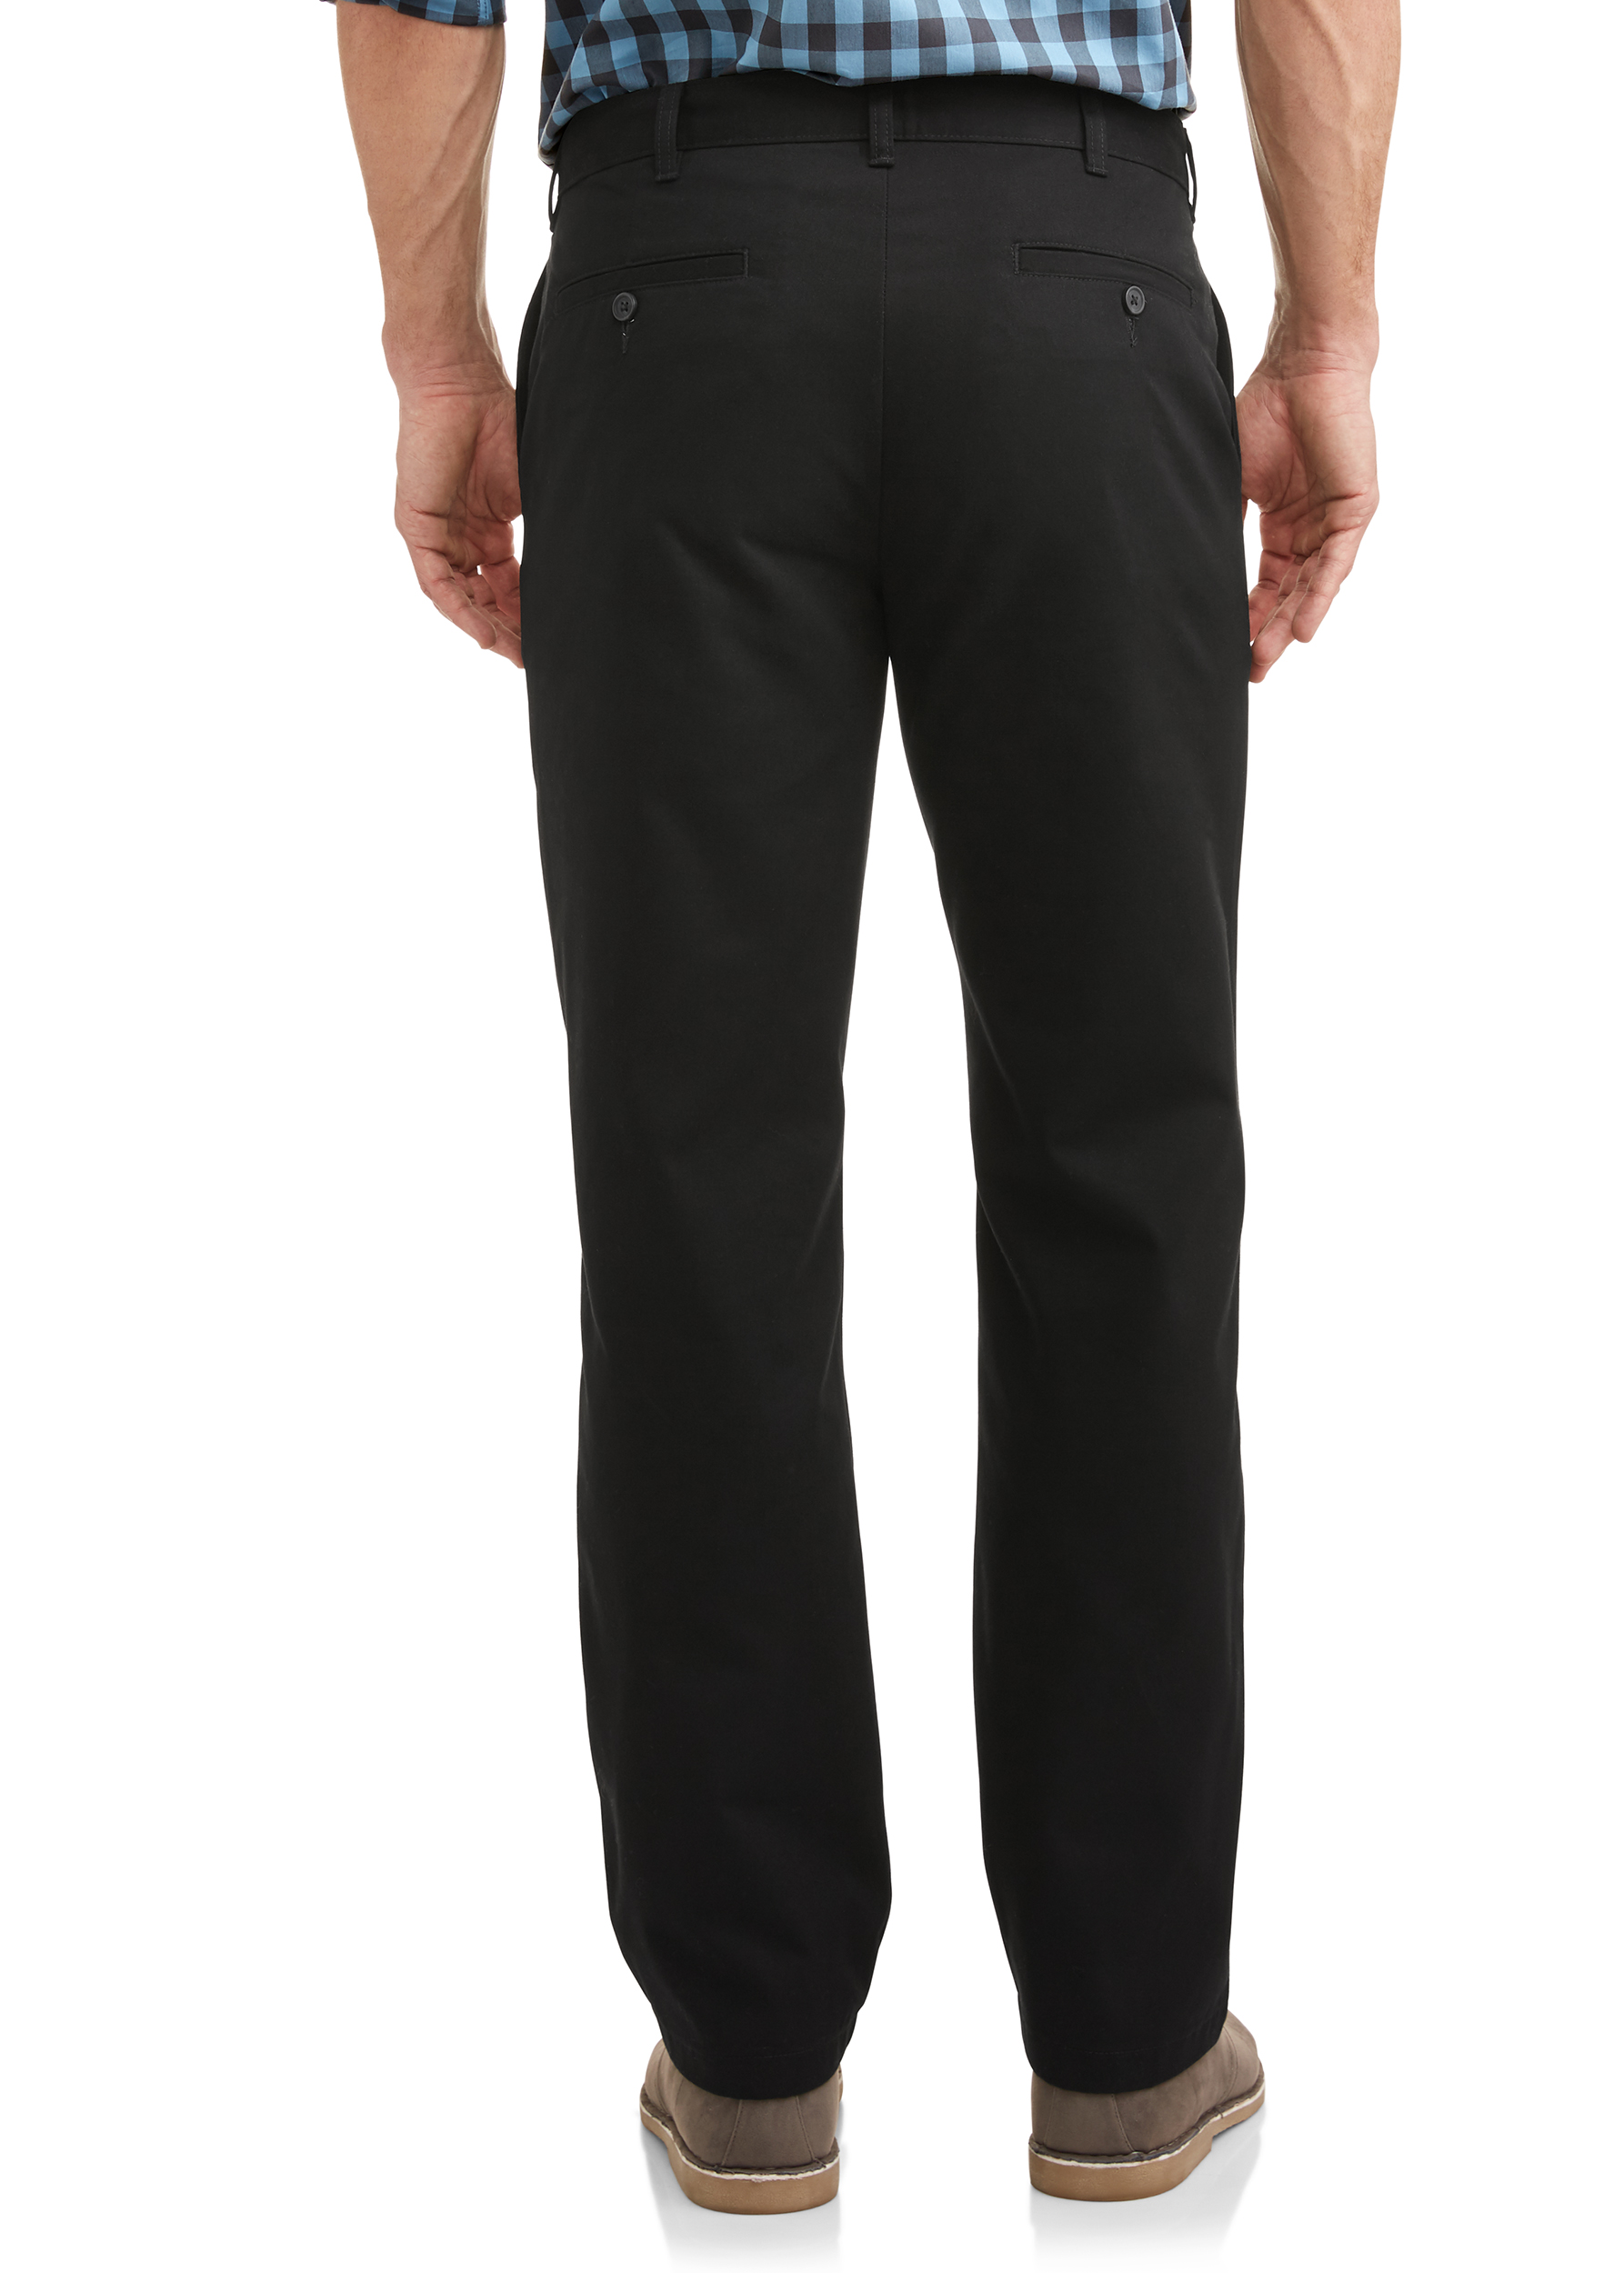 George Men's Flat Front Wrinkle Resistant Pants - image 3 of 4